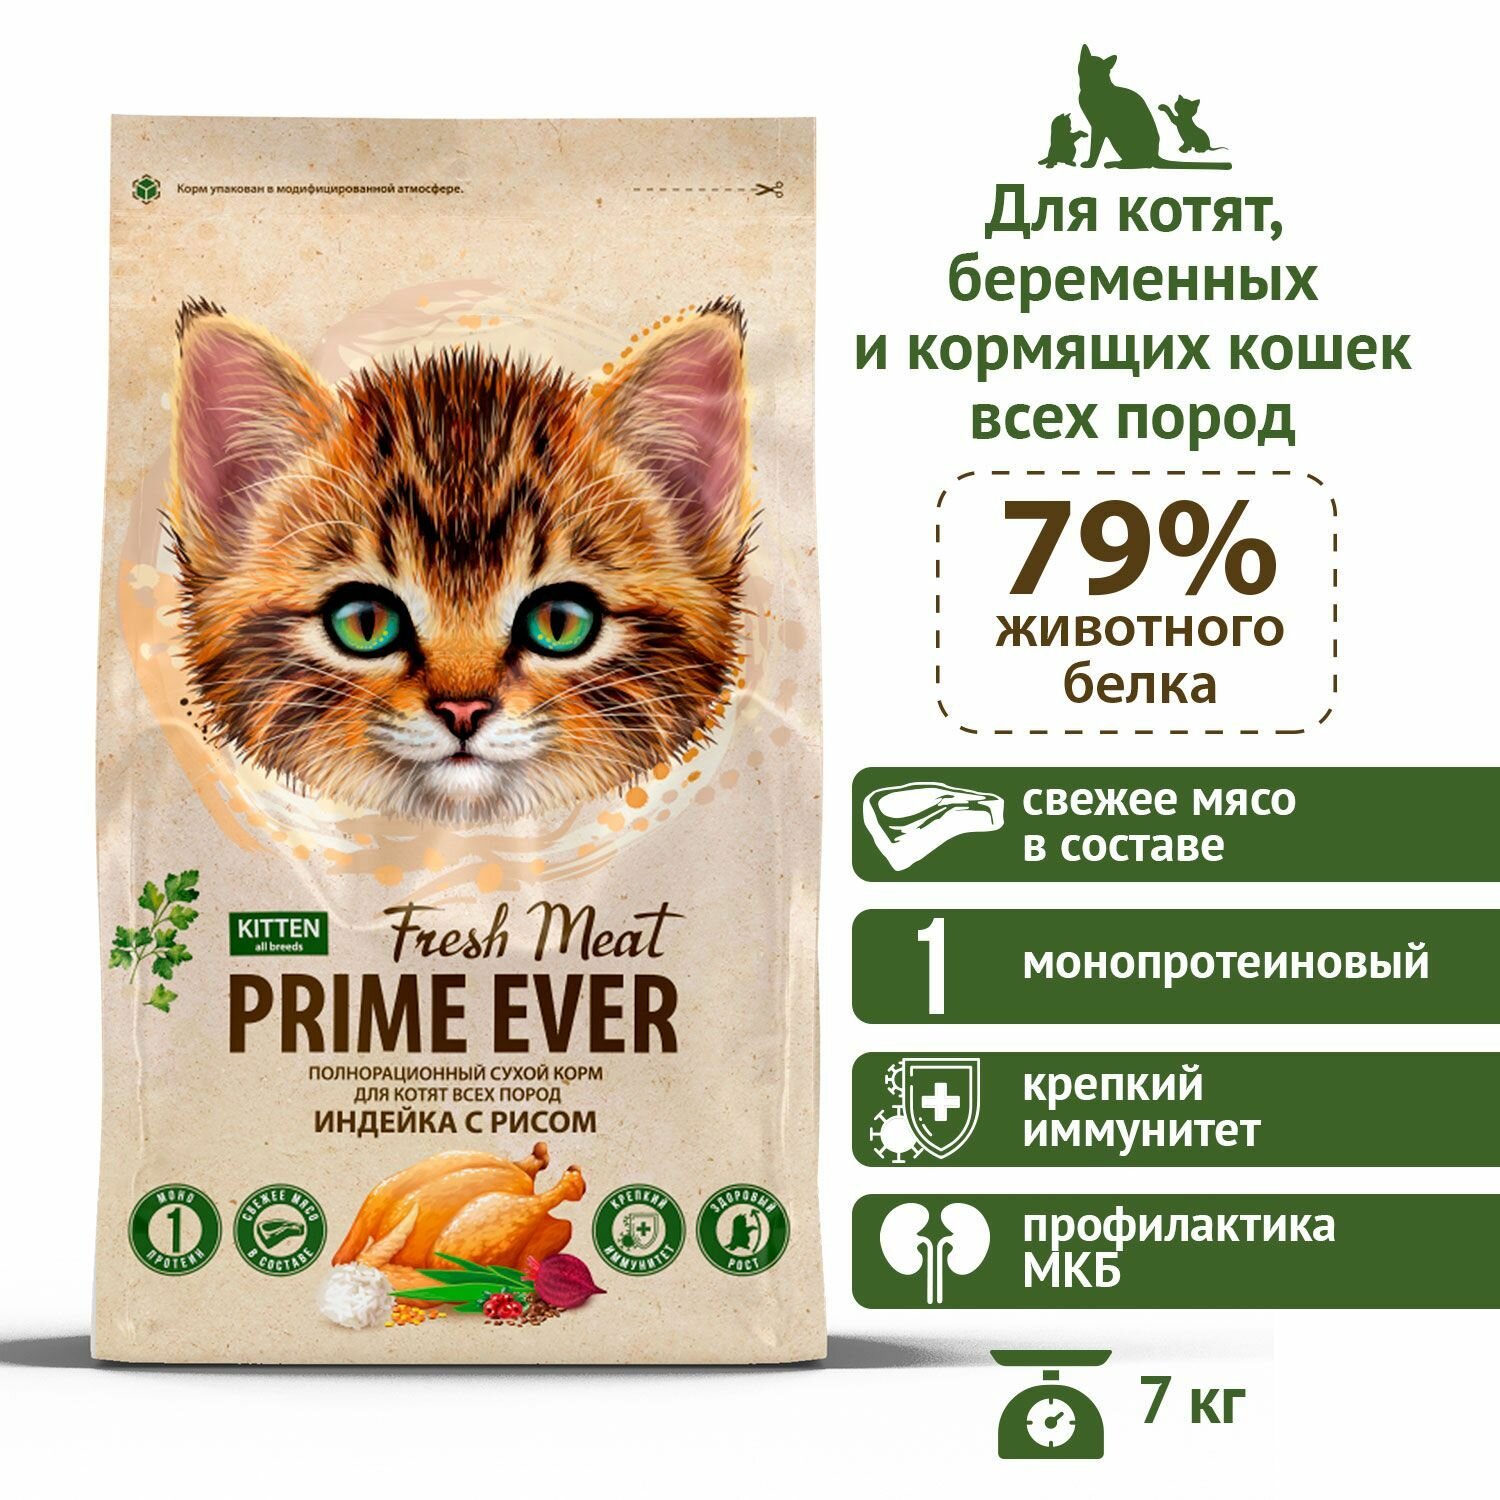 Сухой корм для котят всех пород индейка с рисом Prime Ever Fresh Meat Kitten, 7 кг